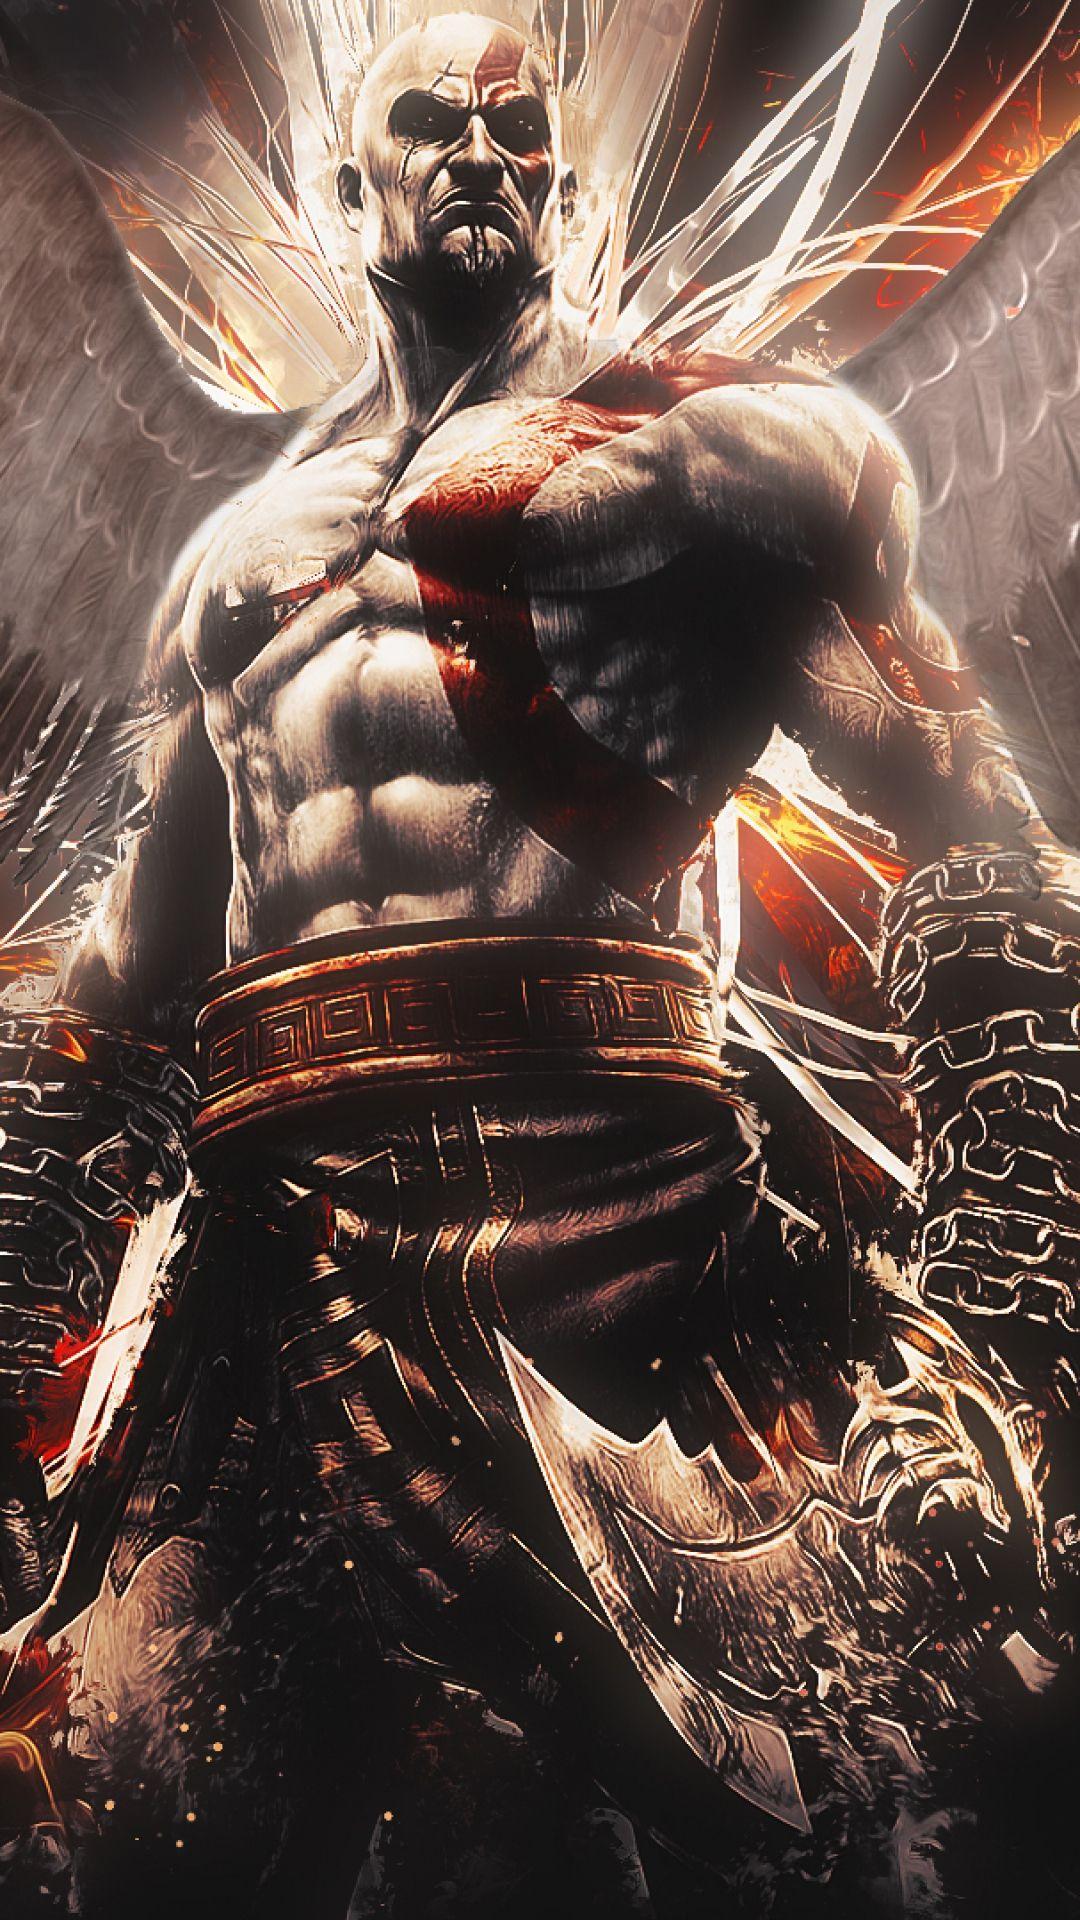 HD Background Kratos God Of War Ascension Game Character Bald